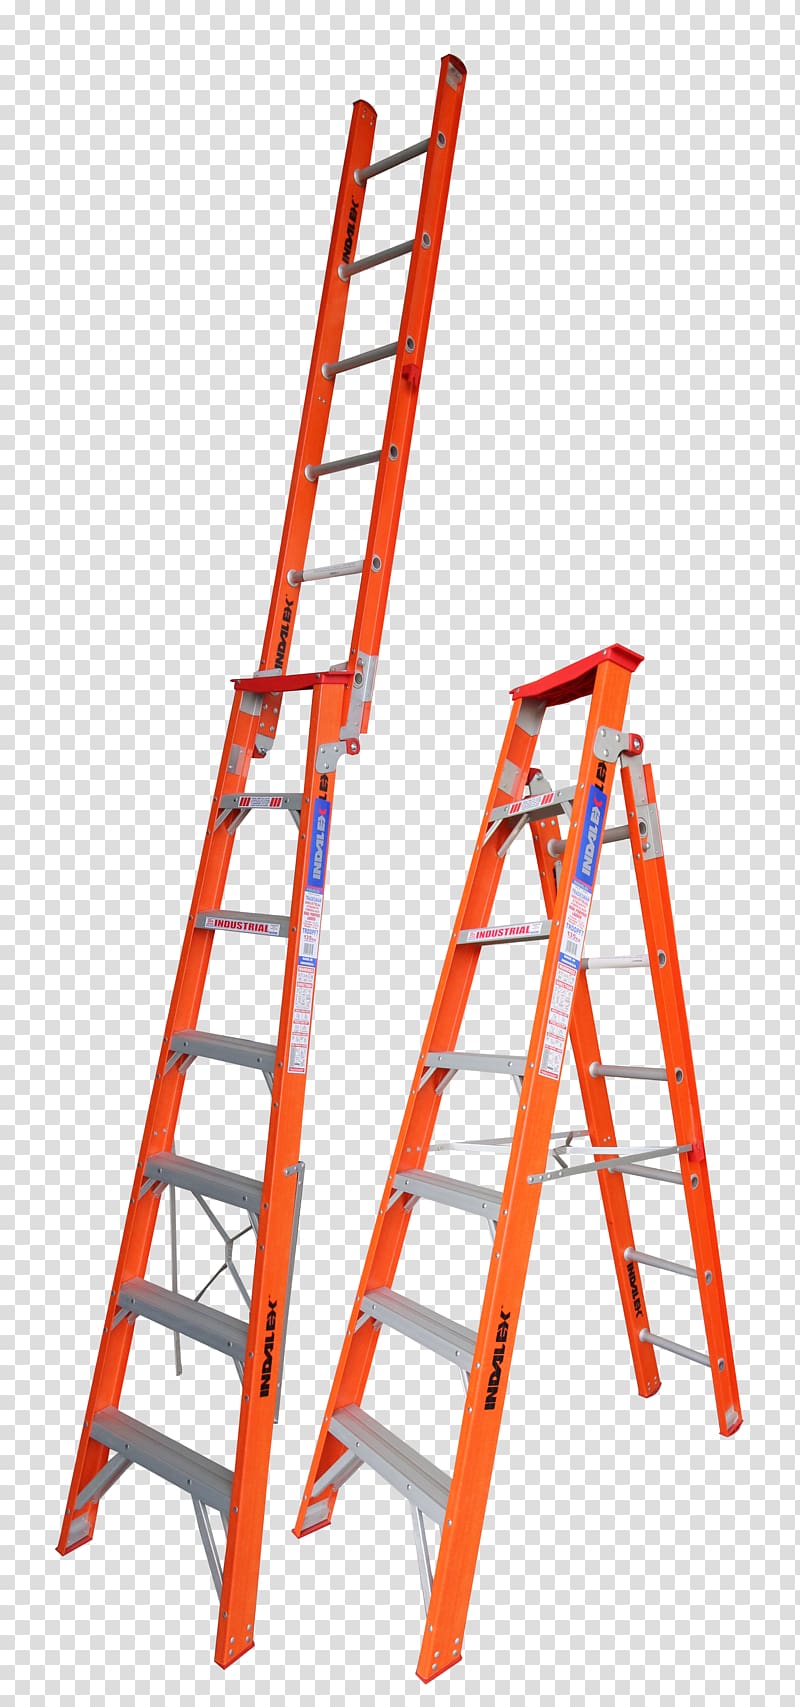 Ladder A-frame Keukentrap Stairs Fiberglass, ladders transparent background PNG clipart